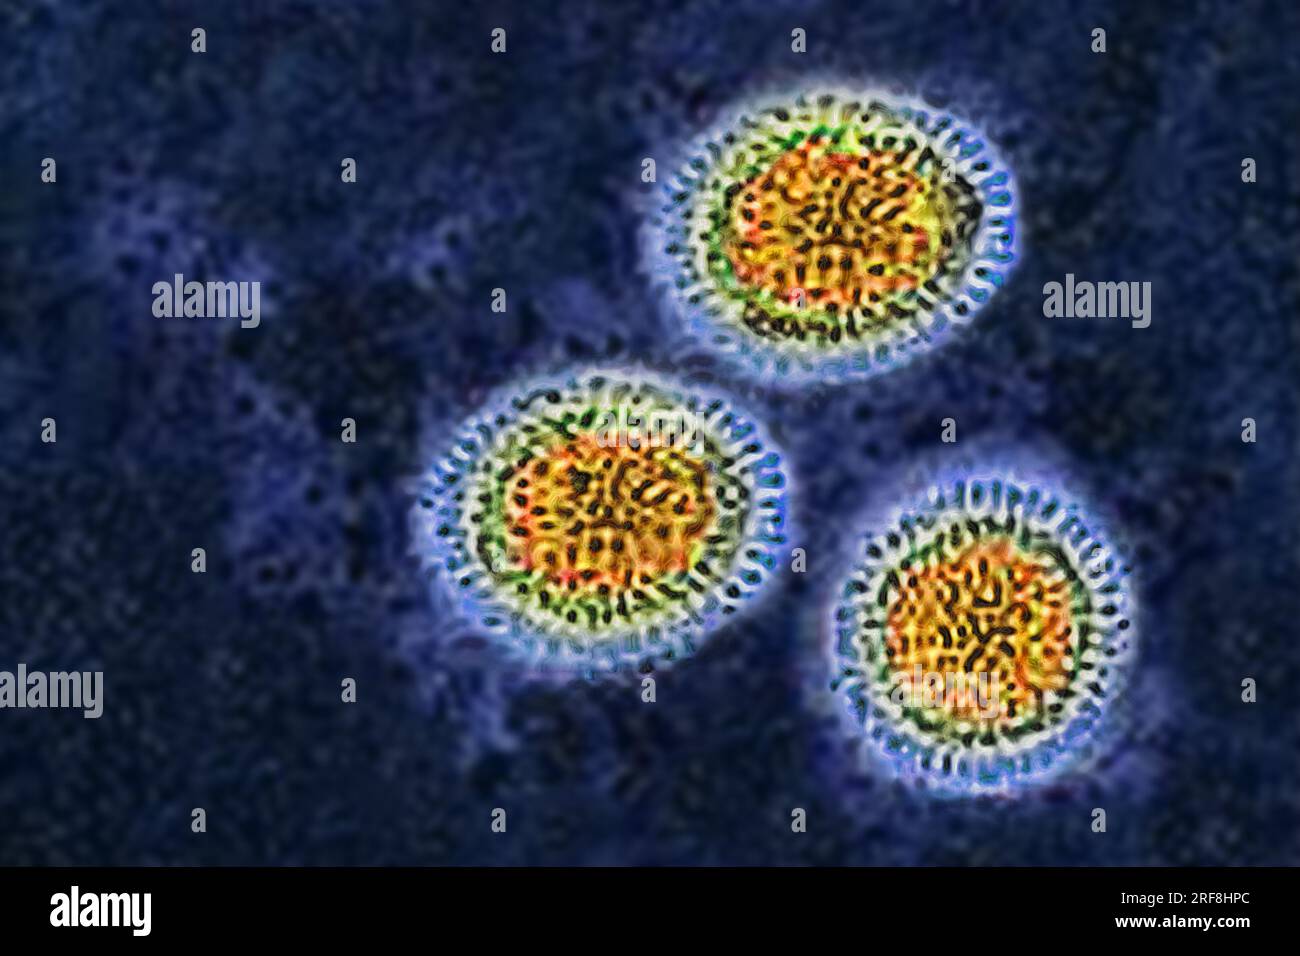 Influenza virus of the Orthomyxoviridae family (respiratory viral infection). Transmission electron microscopy, viral diameter 80 to 120 nanometers. Stock Photo